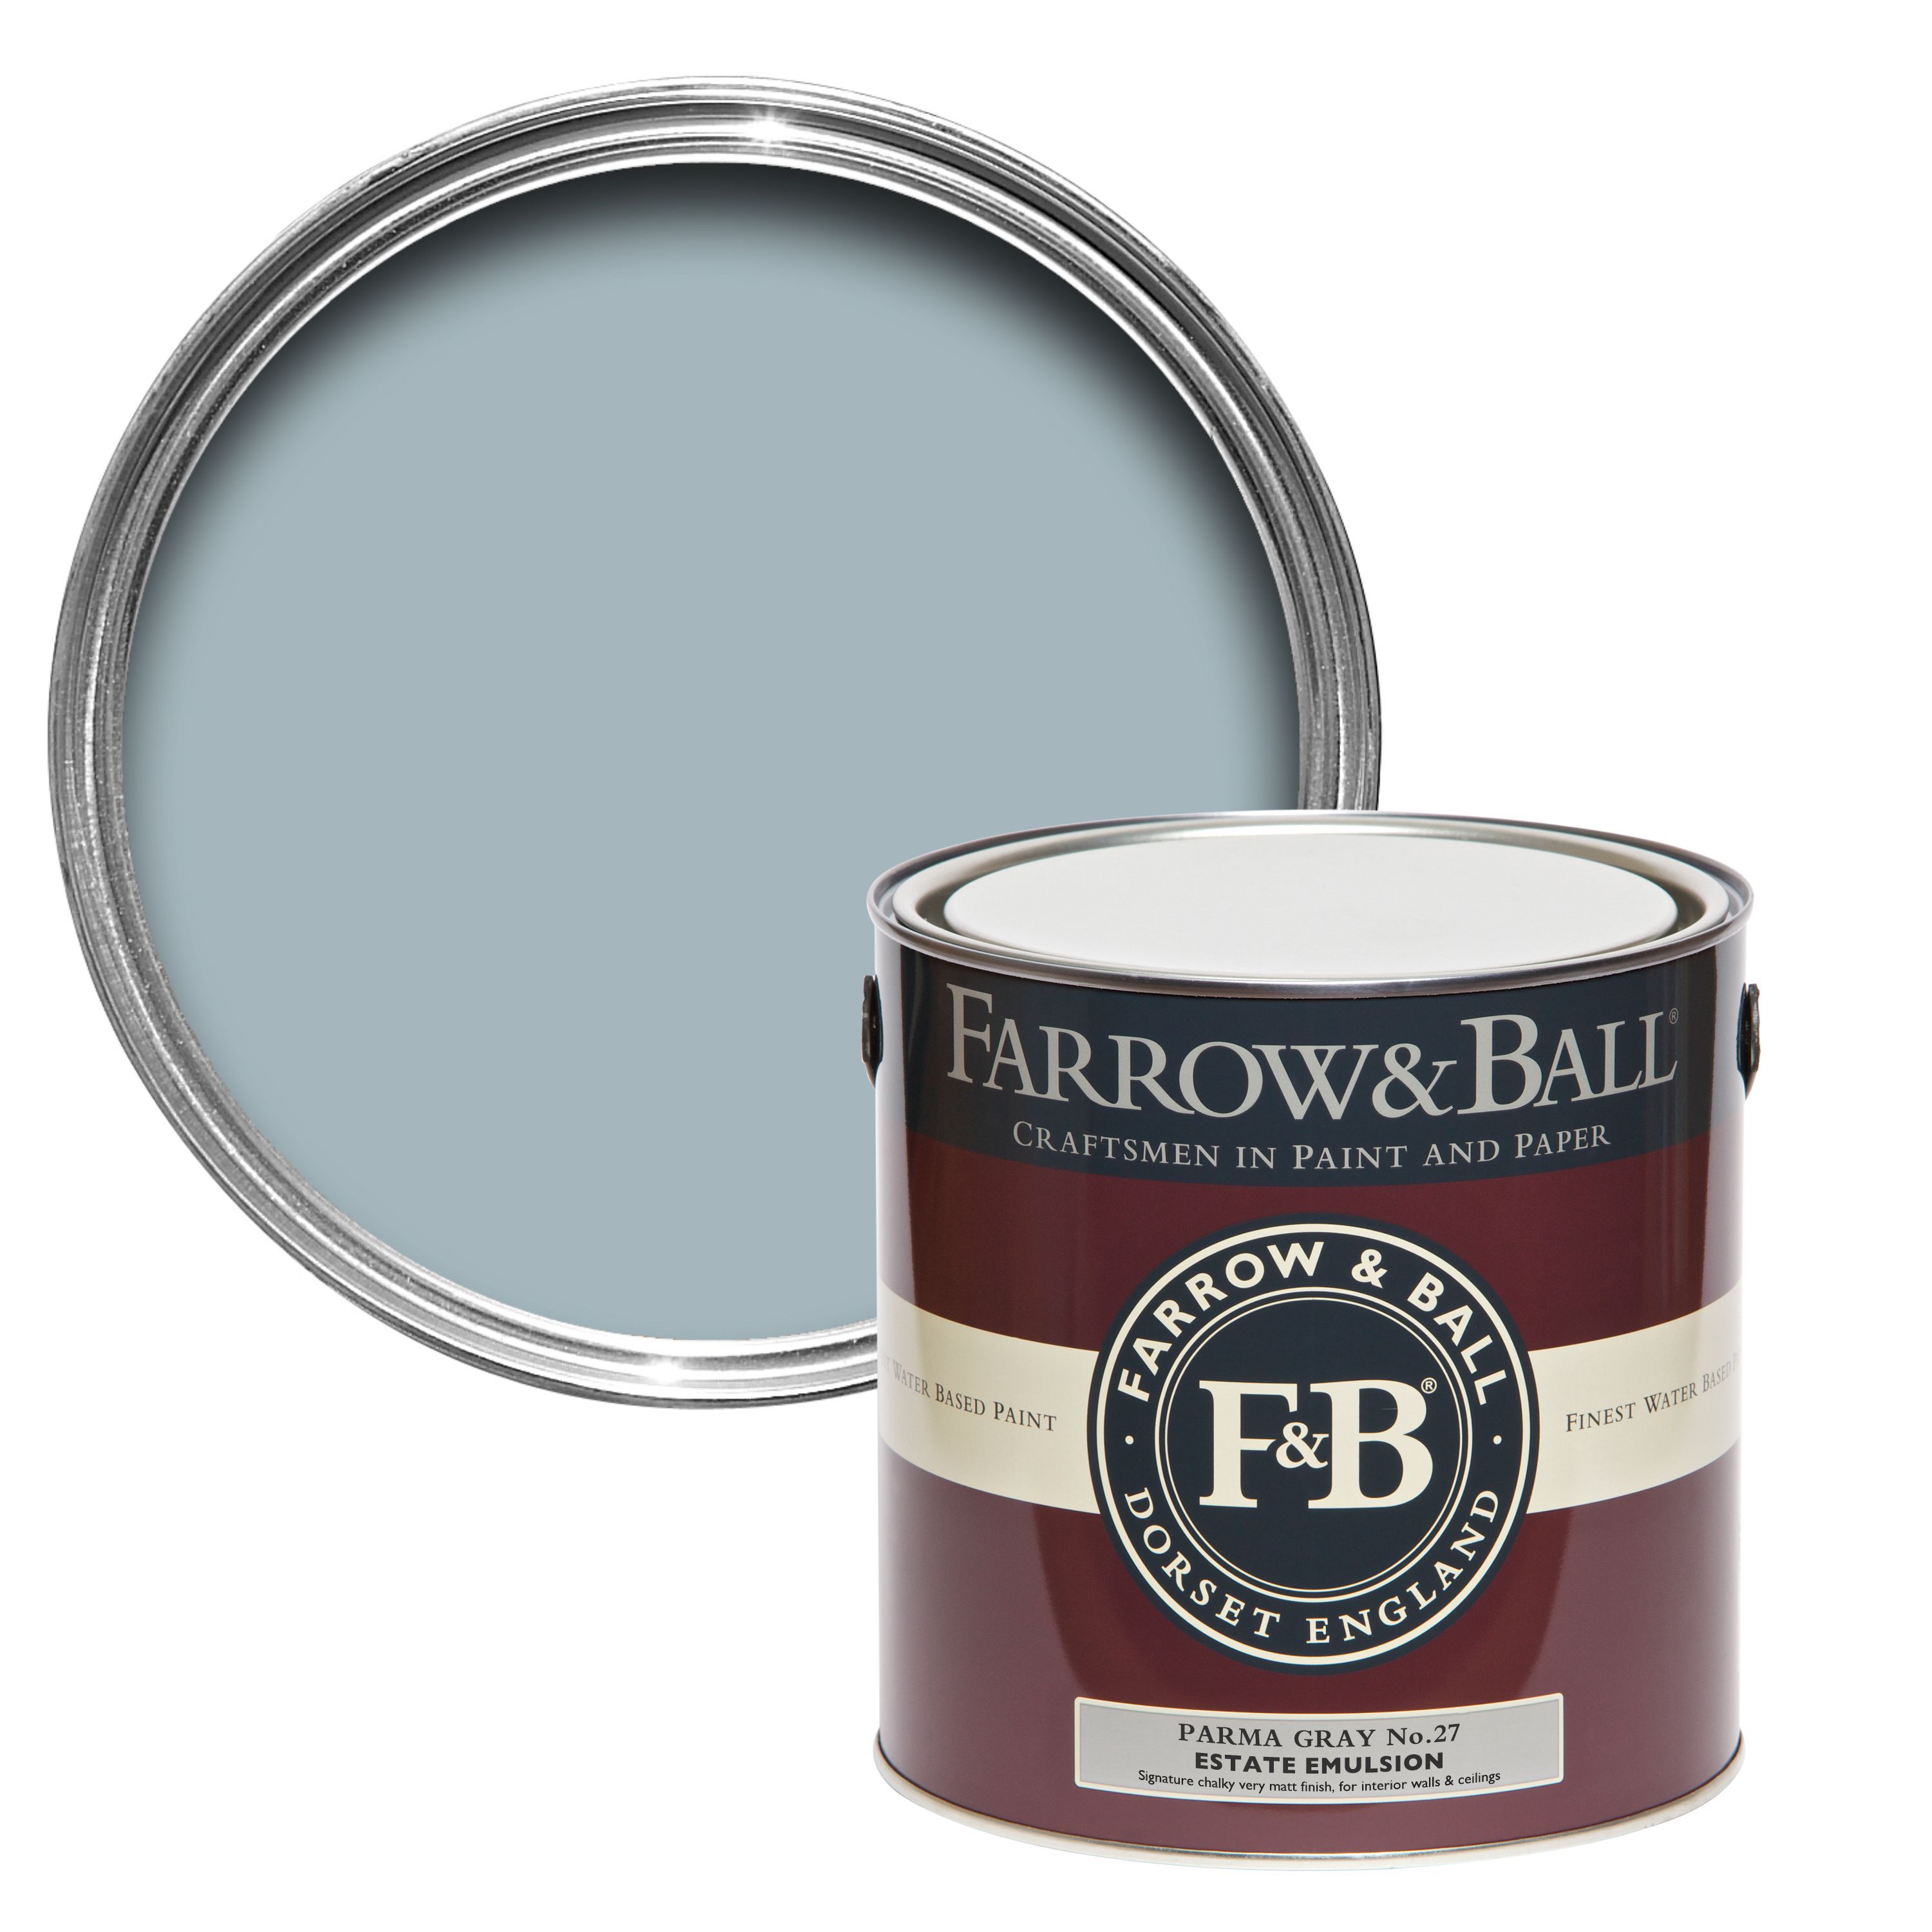 Farrow & Ball Estate Parma gray No.27 Matt Emulsion paint, 2.5L Tester pot